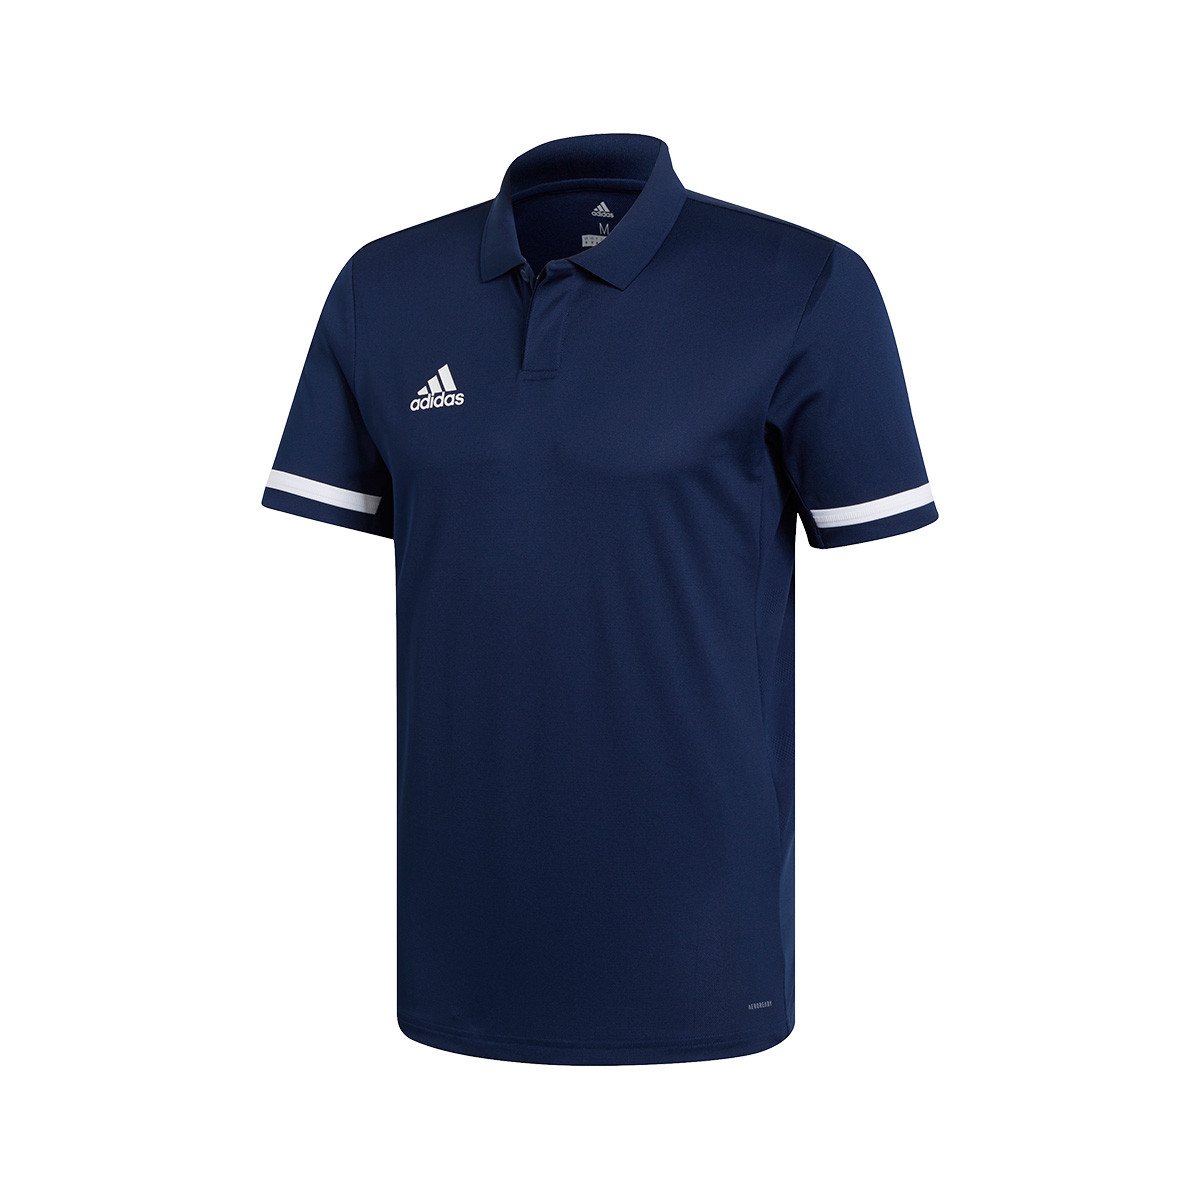 navy blue and white adidas shirt